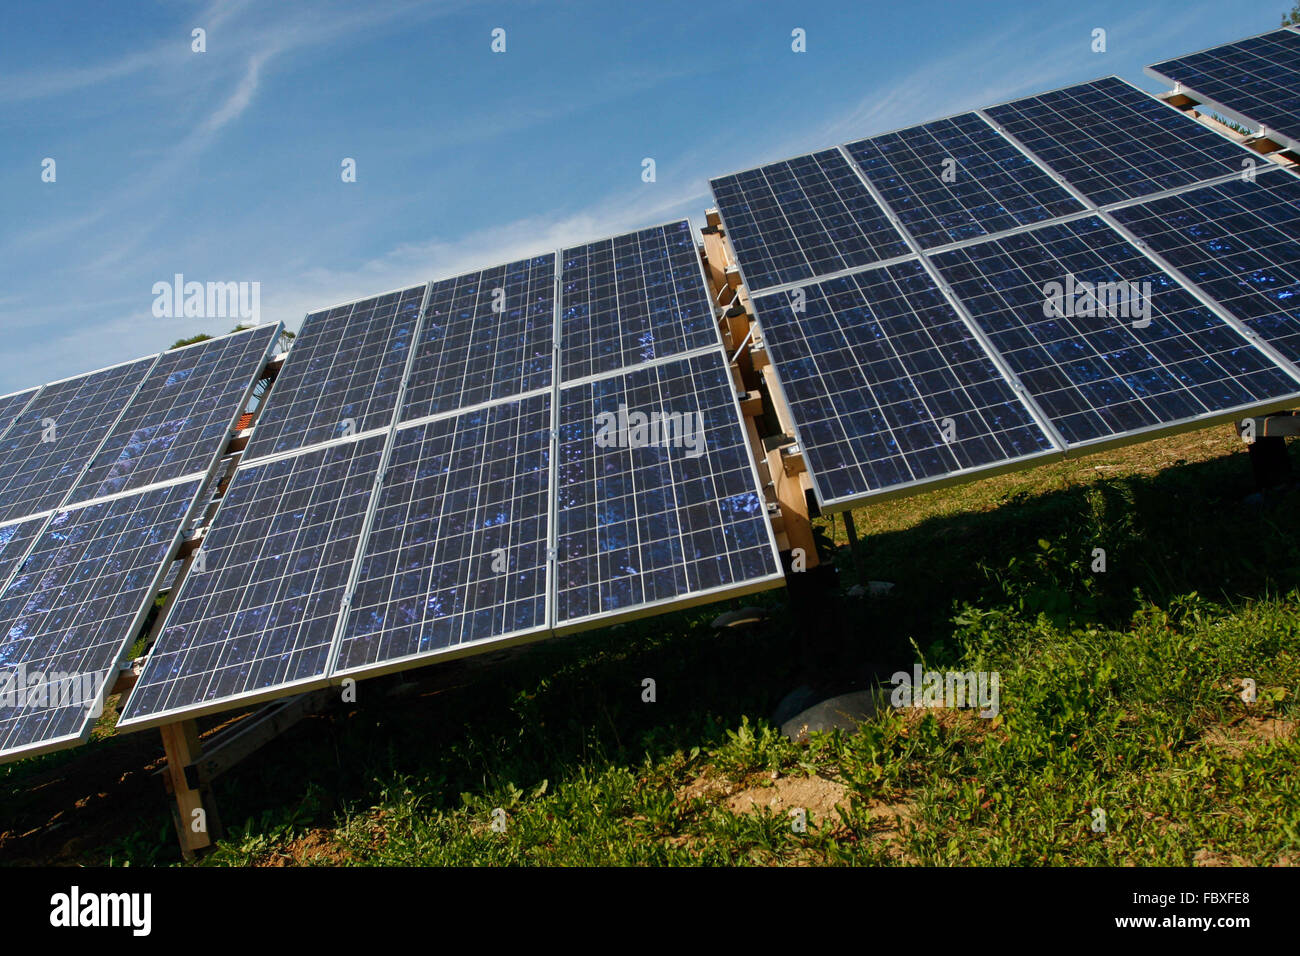 Solar panels, Czech Republic Alternative energy source Stock Photo